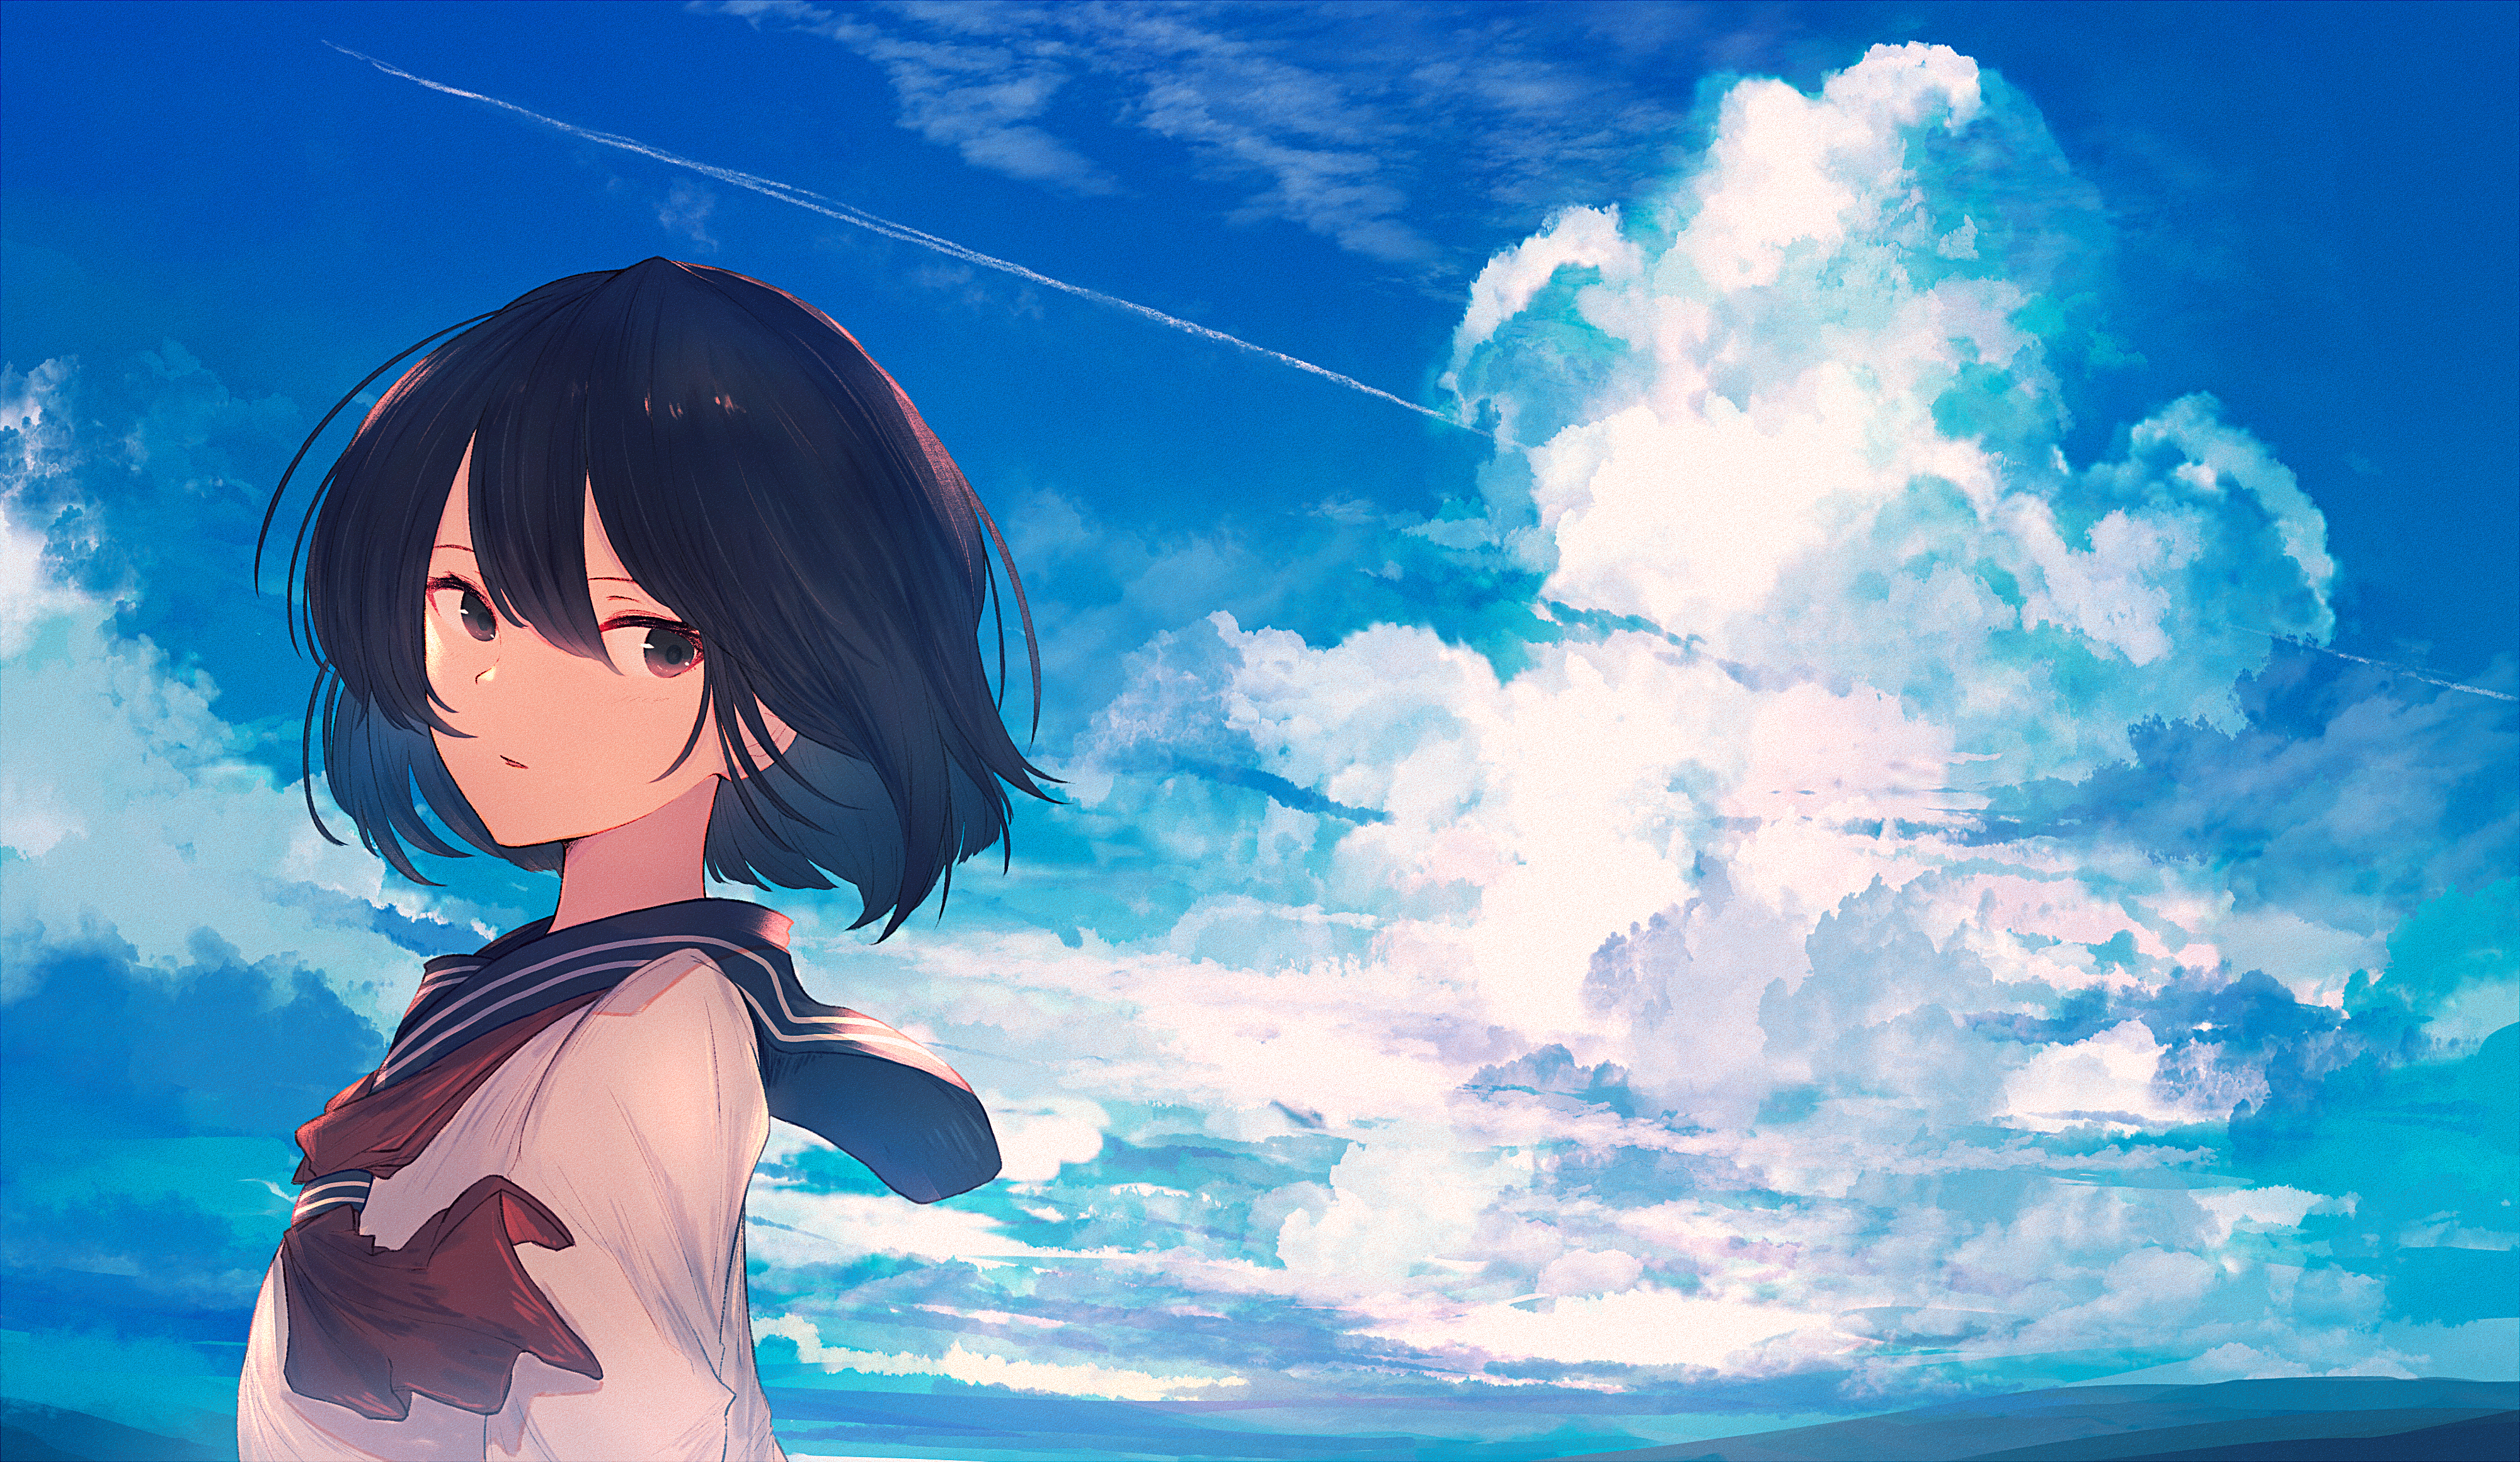 Anime 4000x2320 anime anime girls short hair black hair schoolgirl landscape clouds digital art artwork illustration blue sky outdoors school uniform